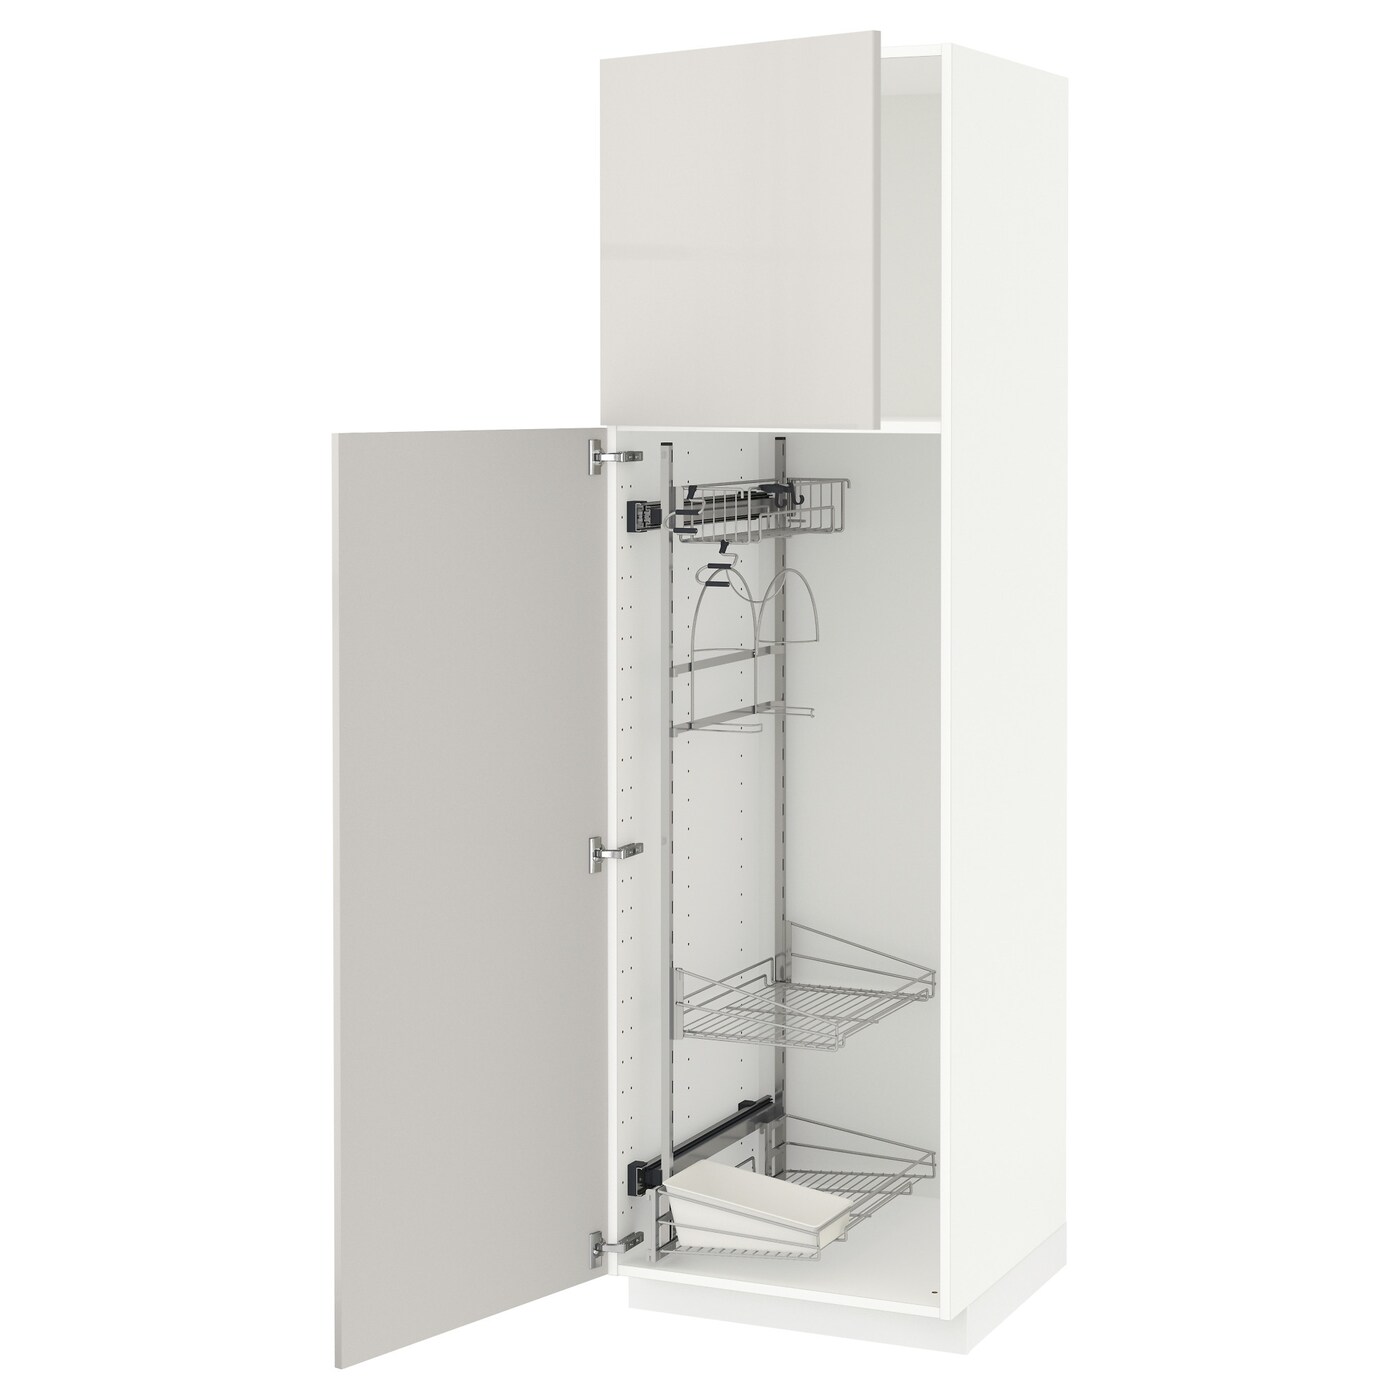 Высокий шкаф/бытовой - IKEA METOD/МЕТОД ИКЕА, 200х60х60 см, белый/светло-серый глянцевый